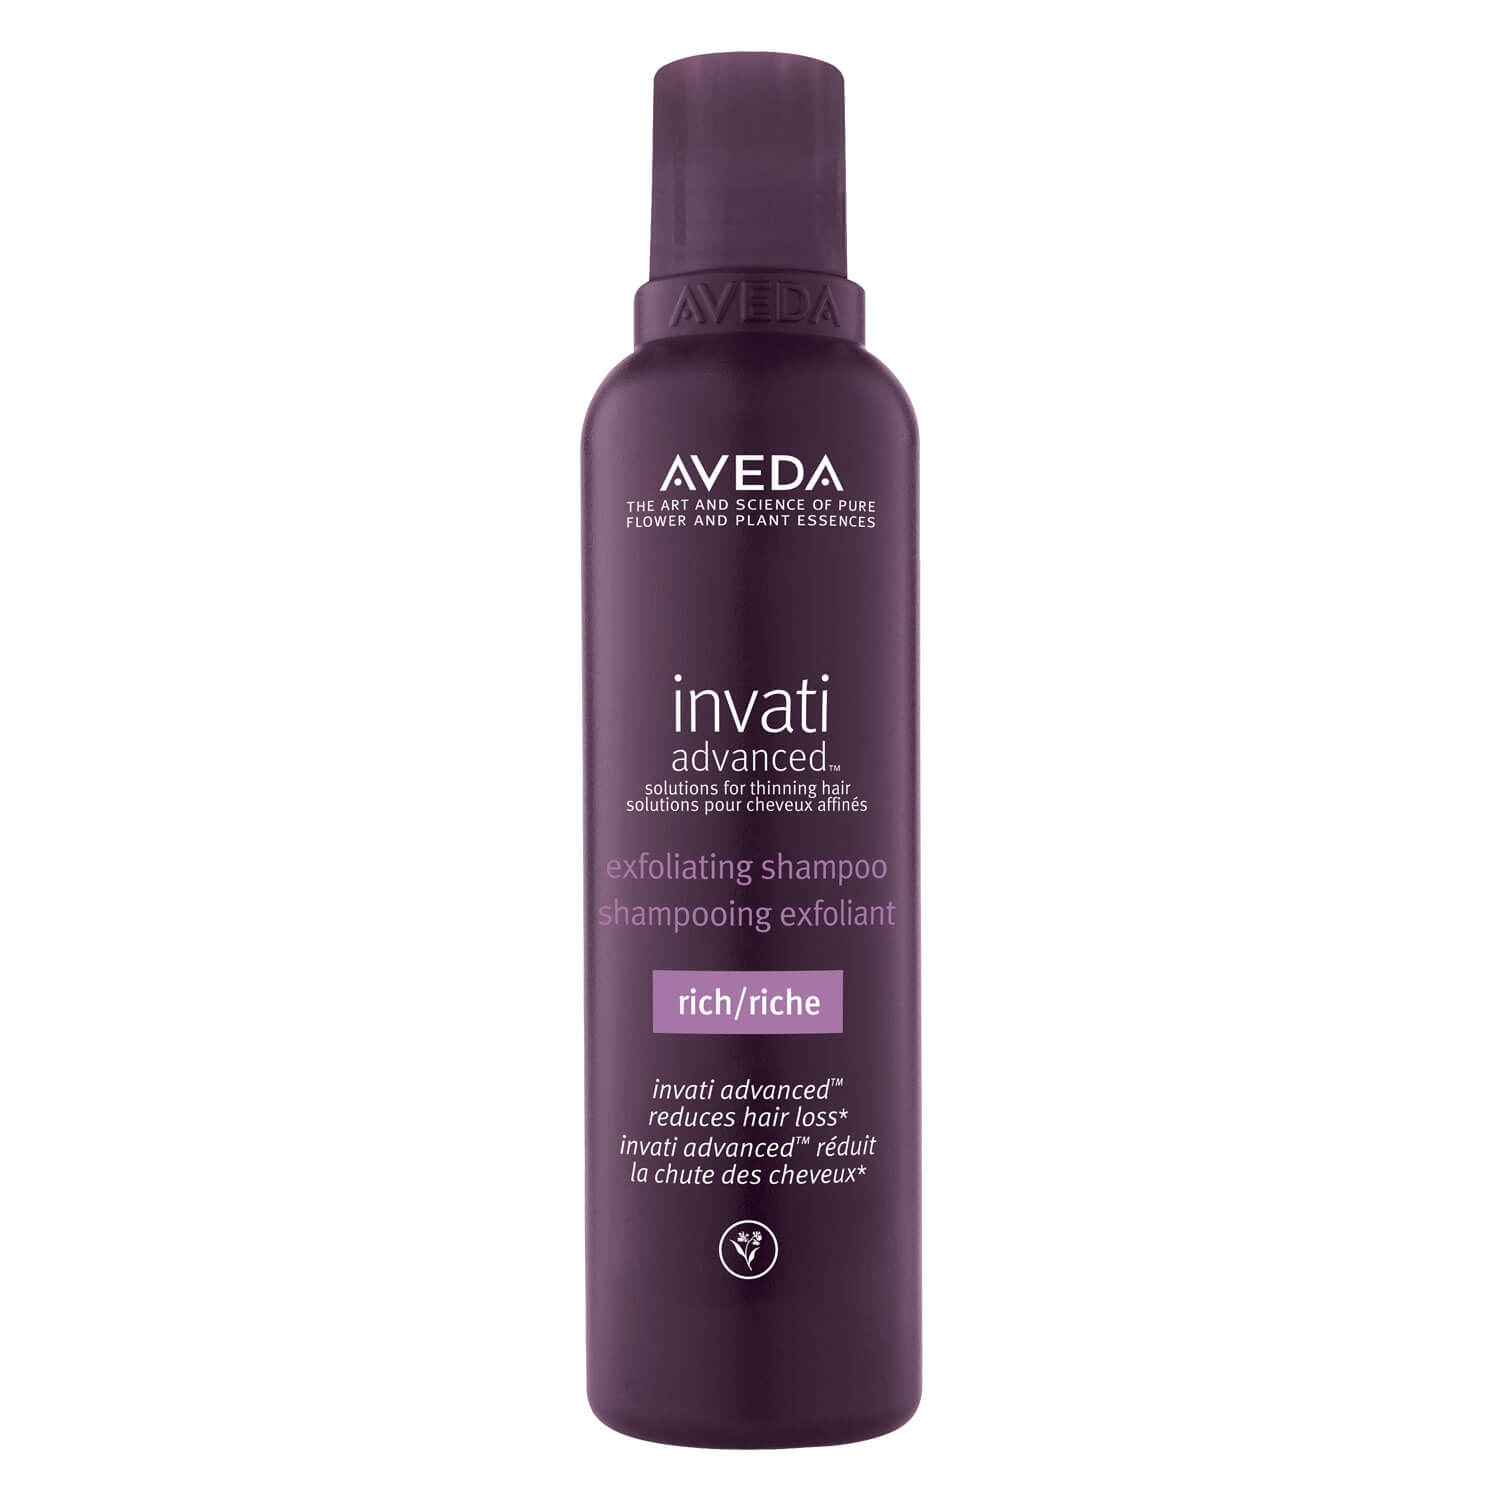 Produktbild von invati advanced - exfoliating shampoo rich